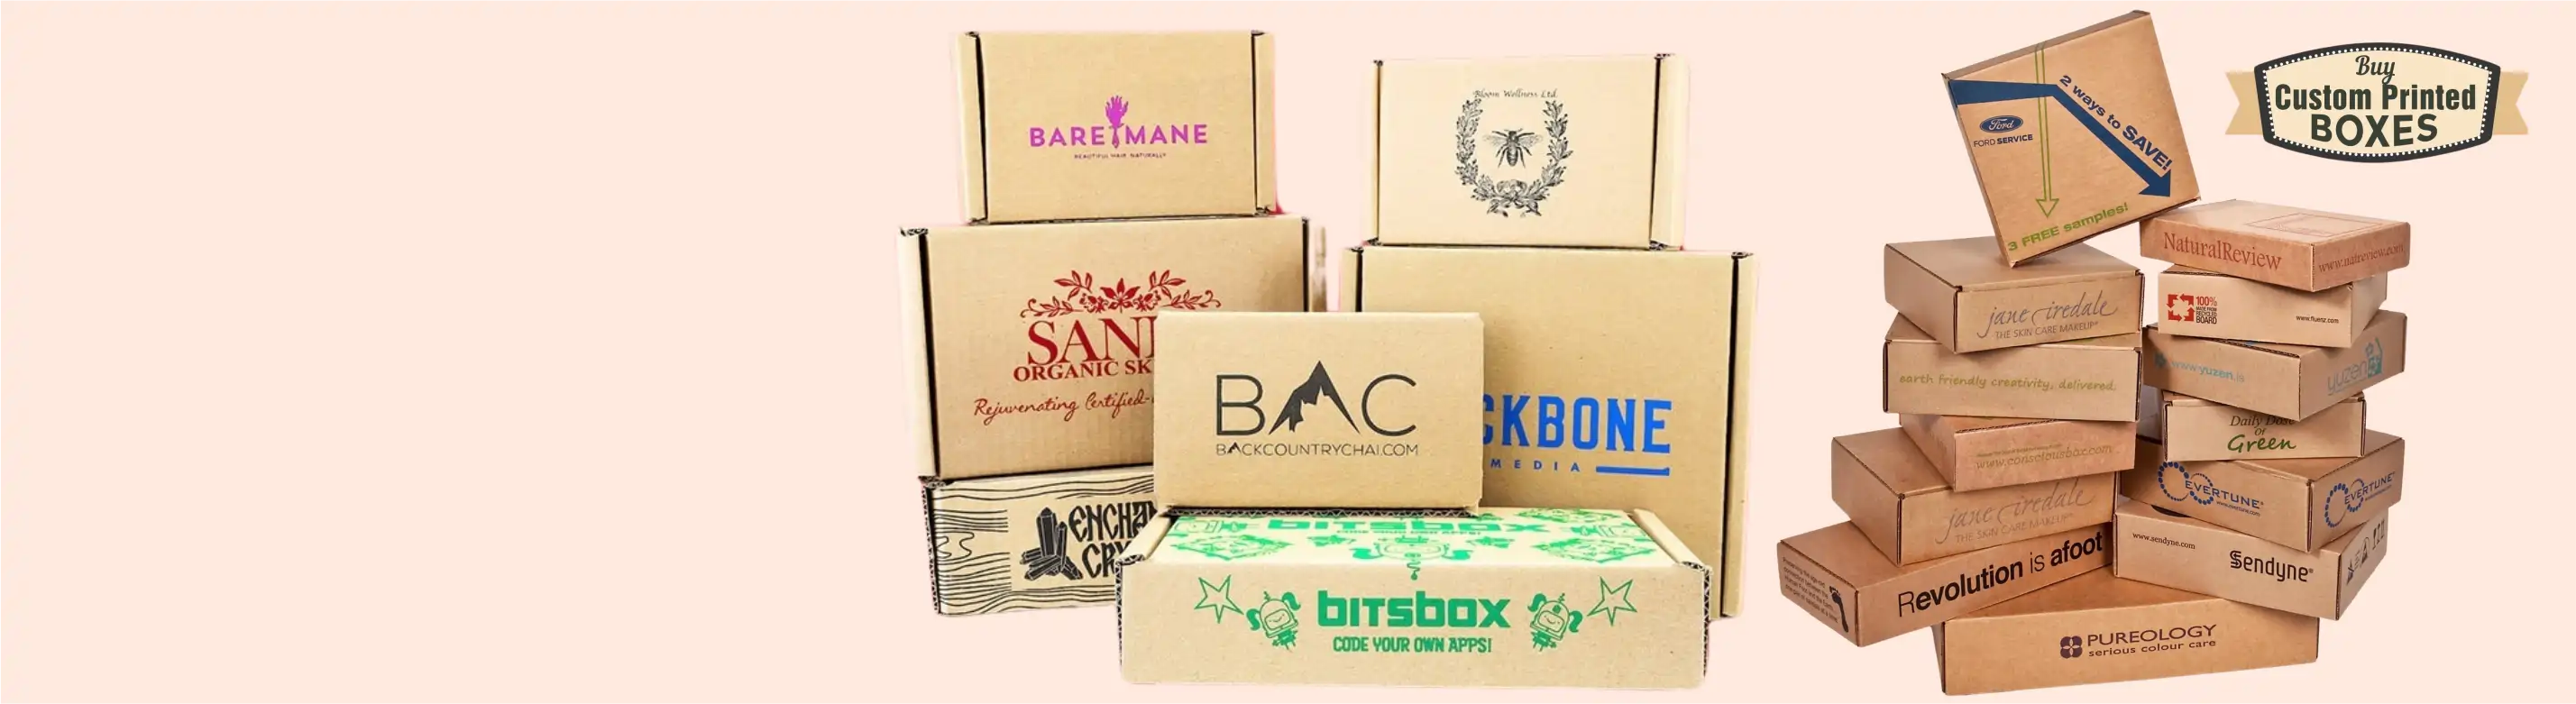 U-Pack Custom Printed Boxes